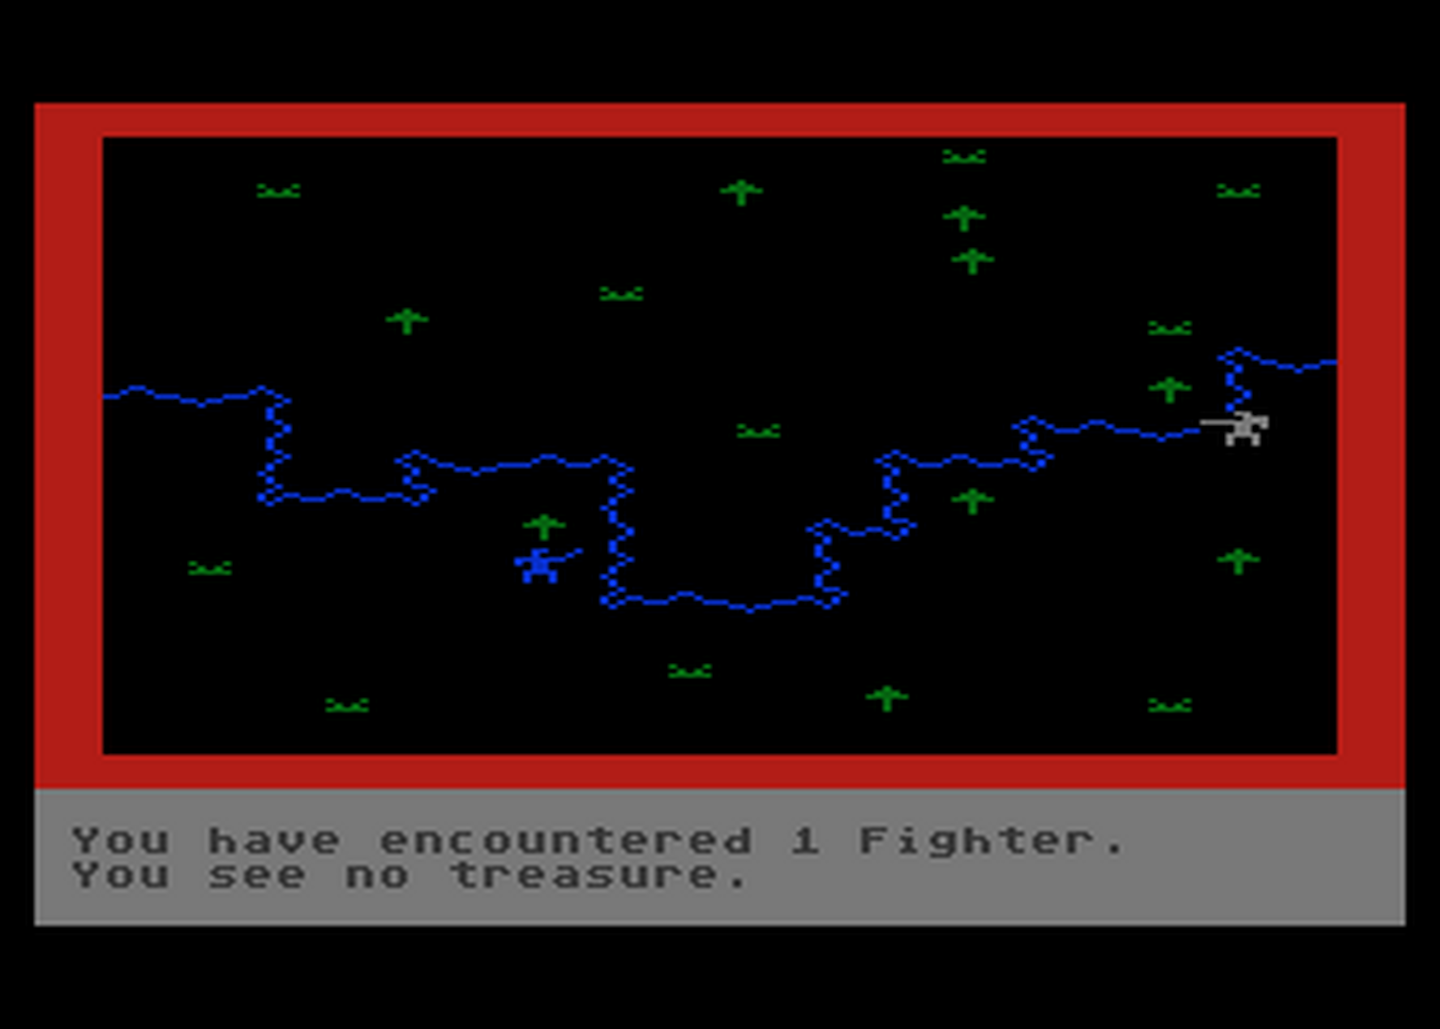 Atari GameBase Warrior_Of_Ras_#3_-_The_Wylde ScreenPlay 1982